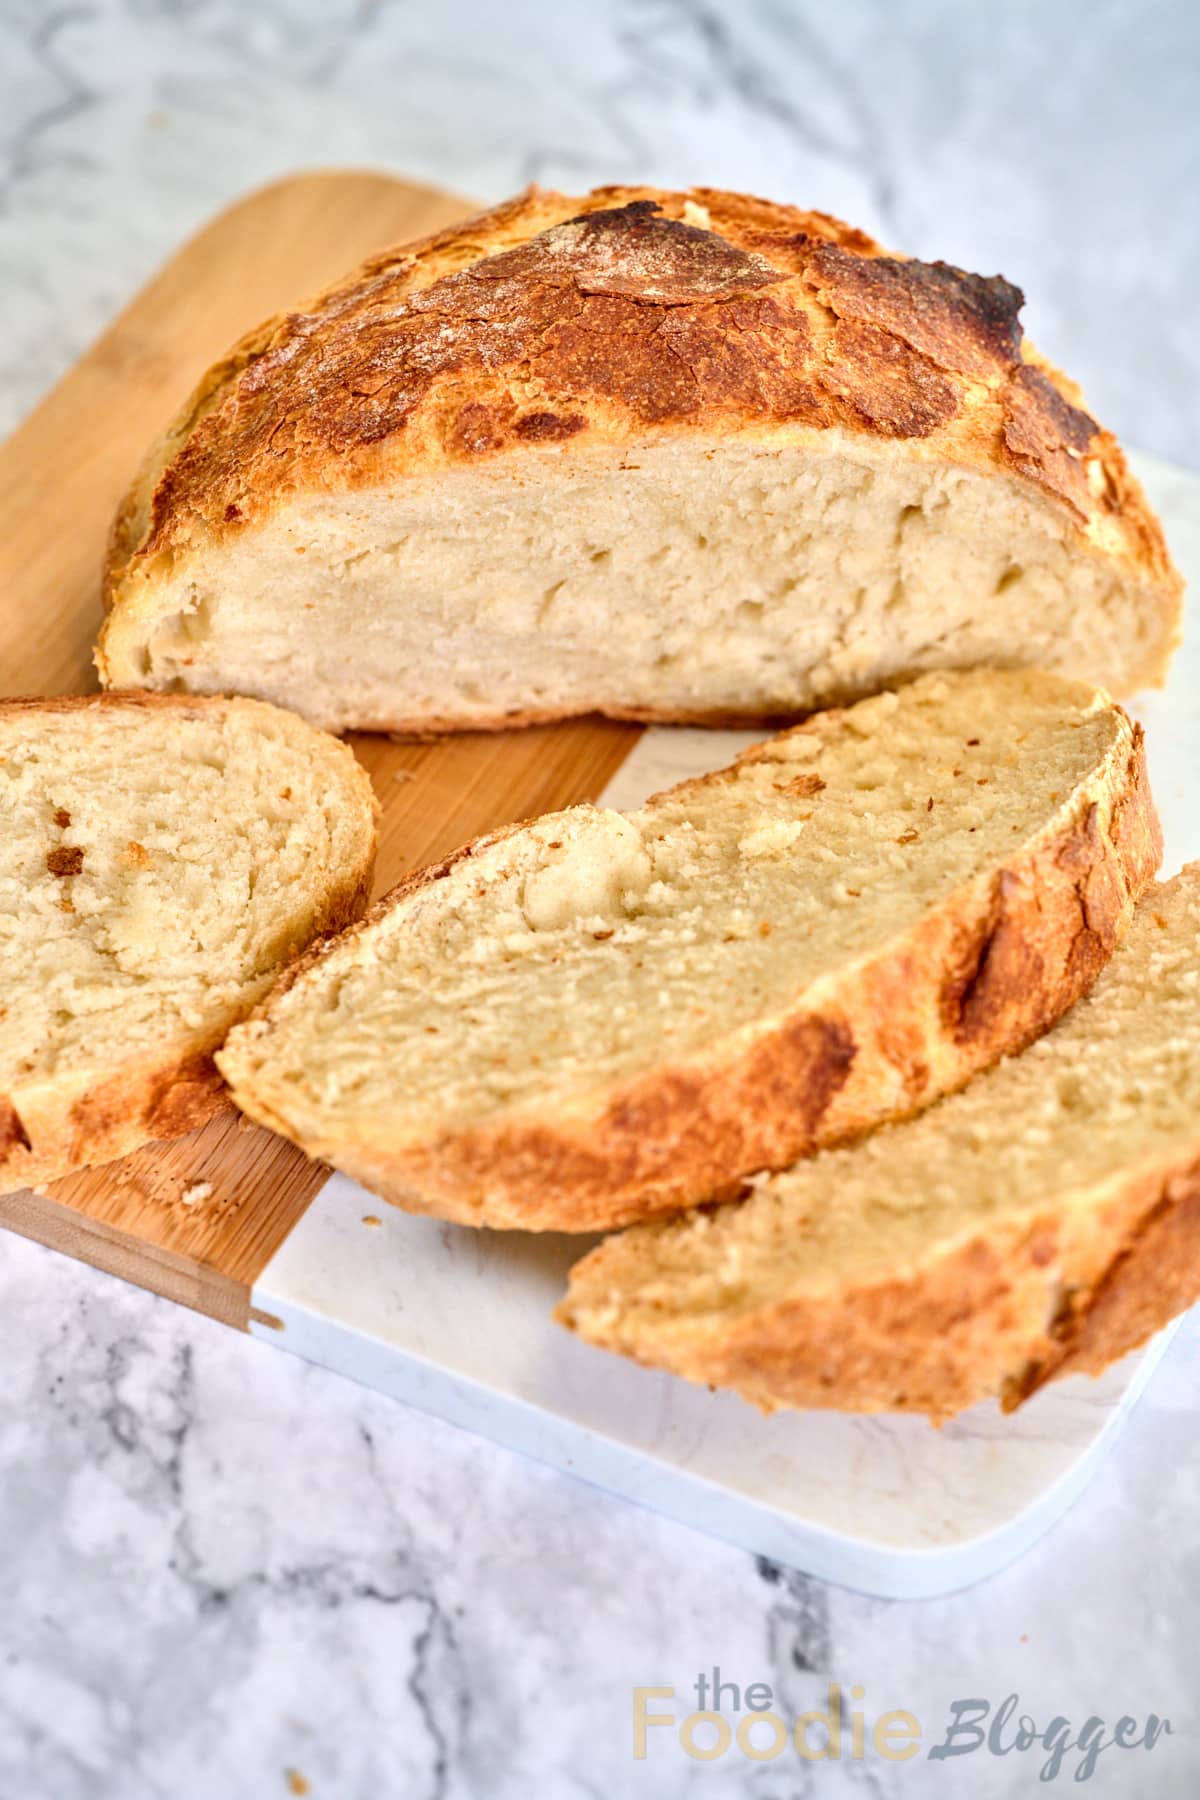 thefoodieblogger No Knead Bread Recipe 5